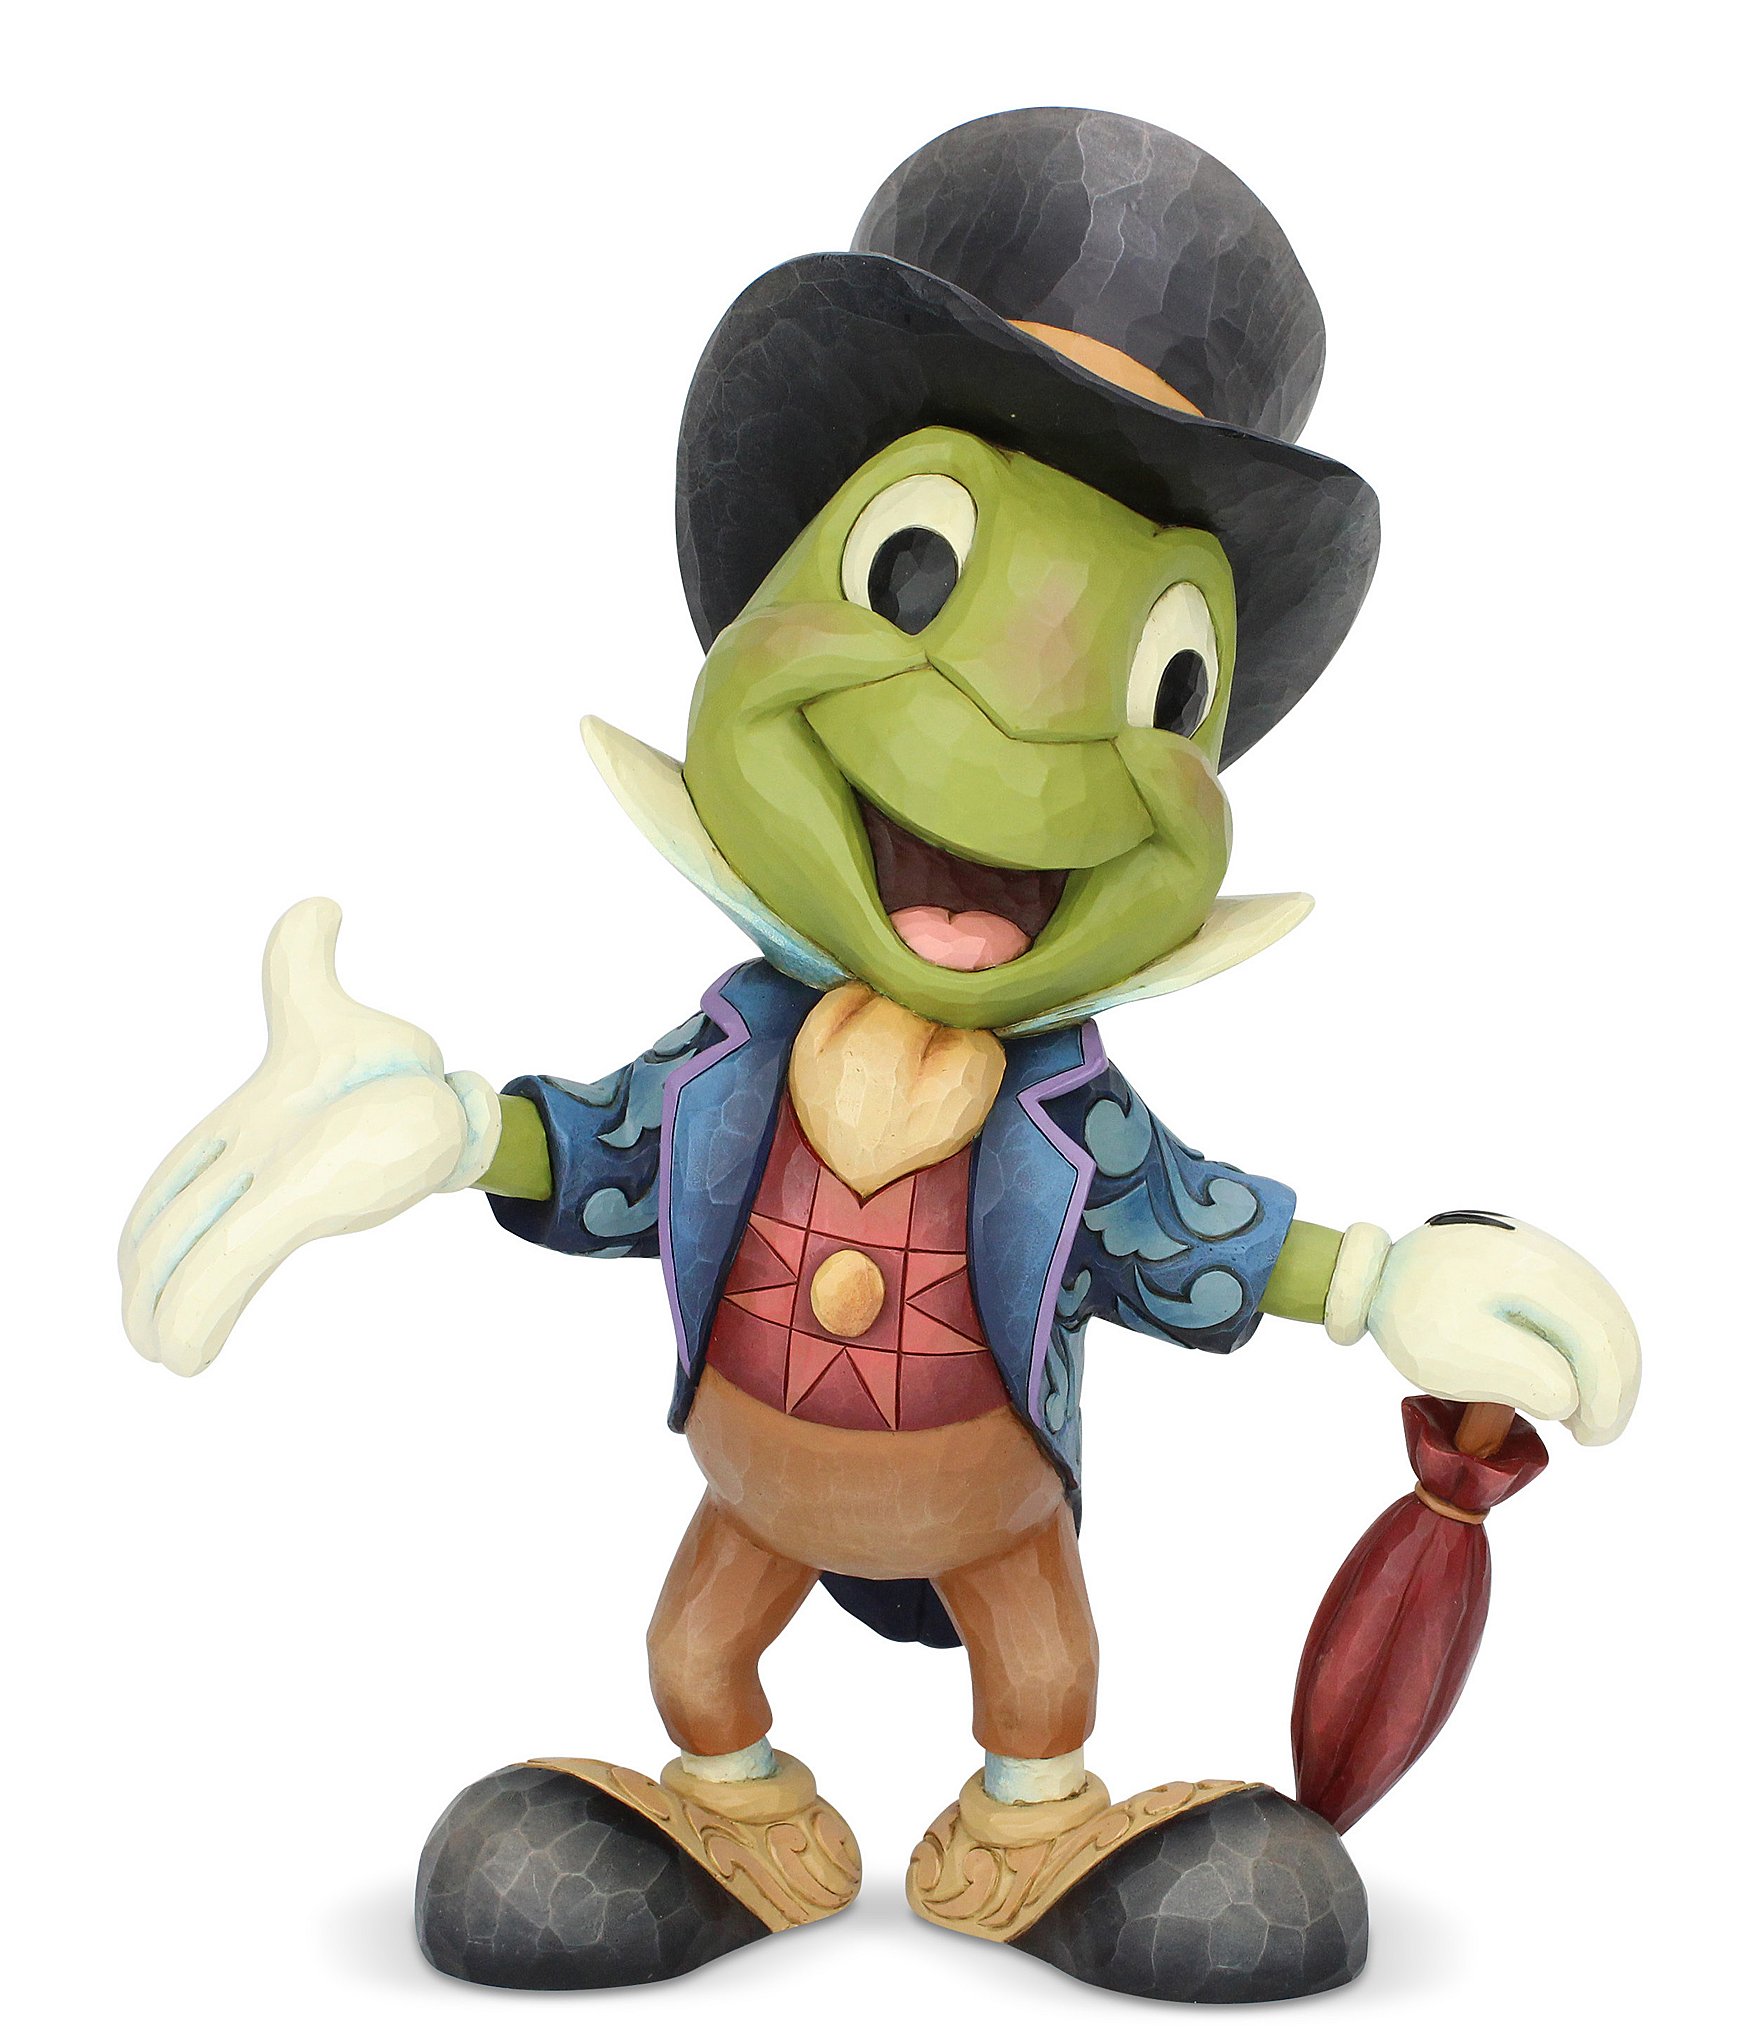 Figurine Pinocchio et Jiminy Cricket – Disney Traditions